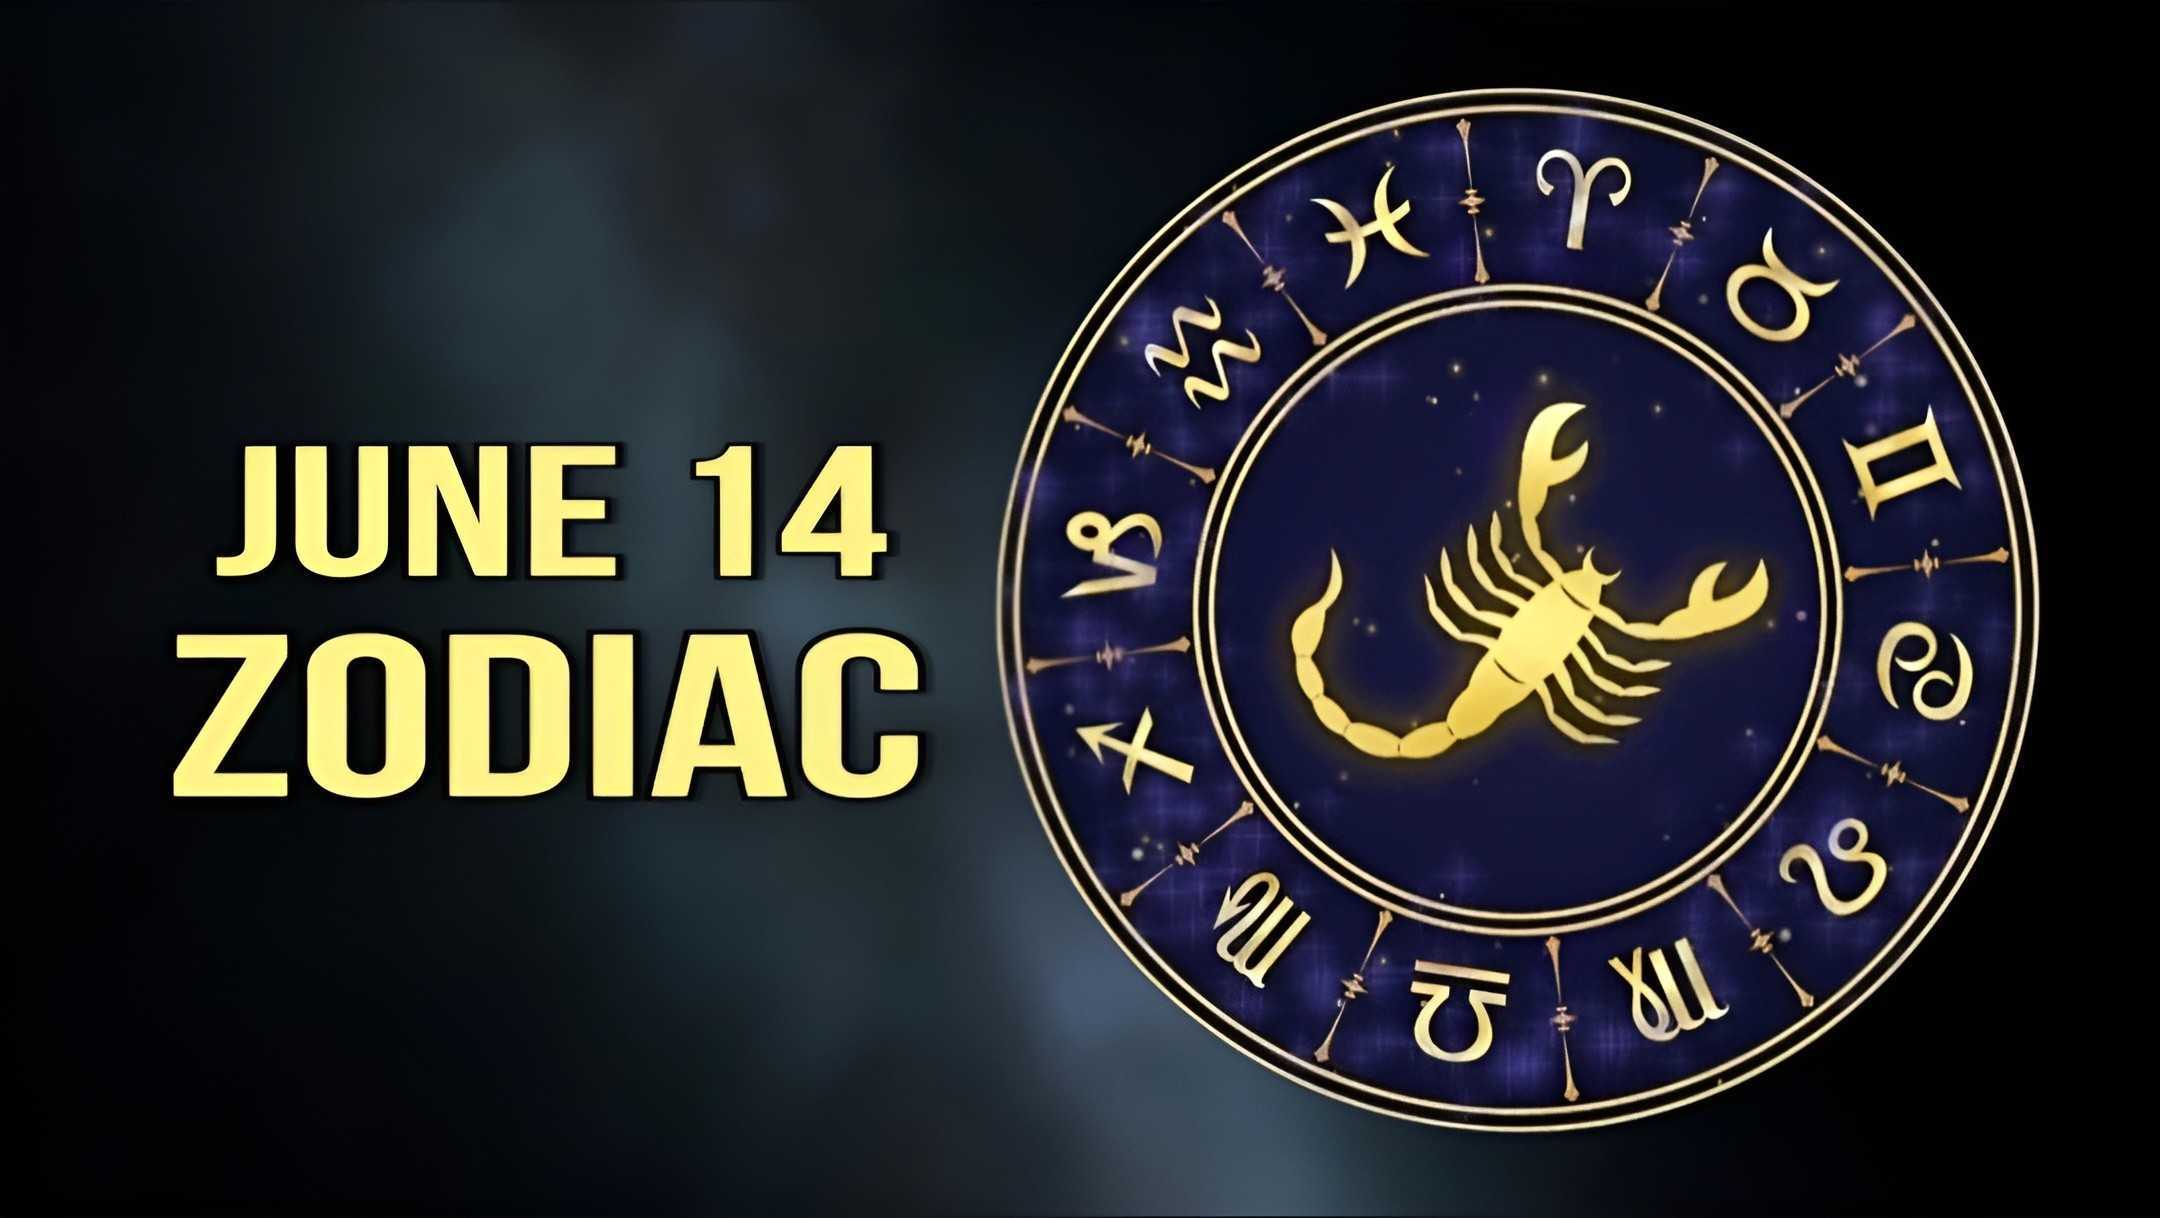 June 14 Zodiac